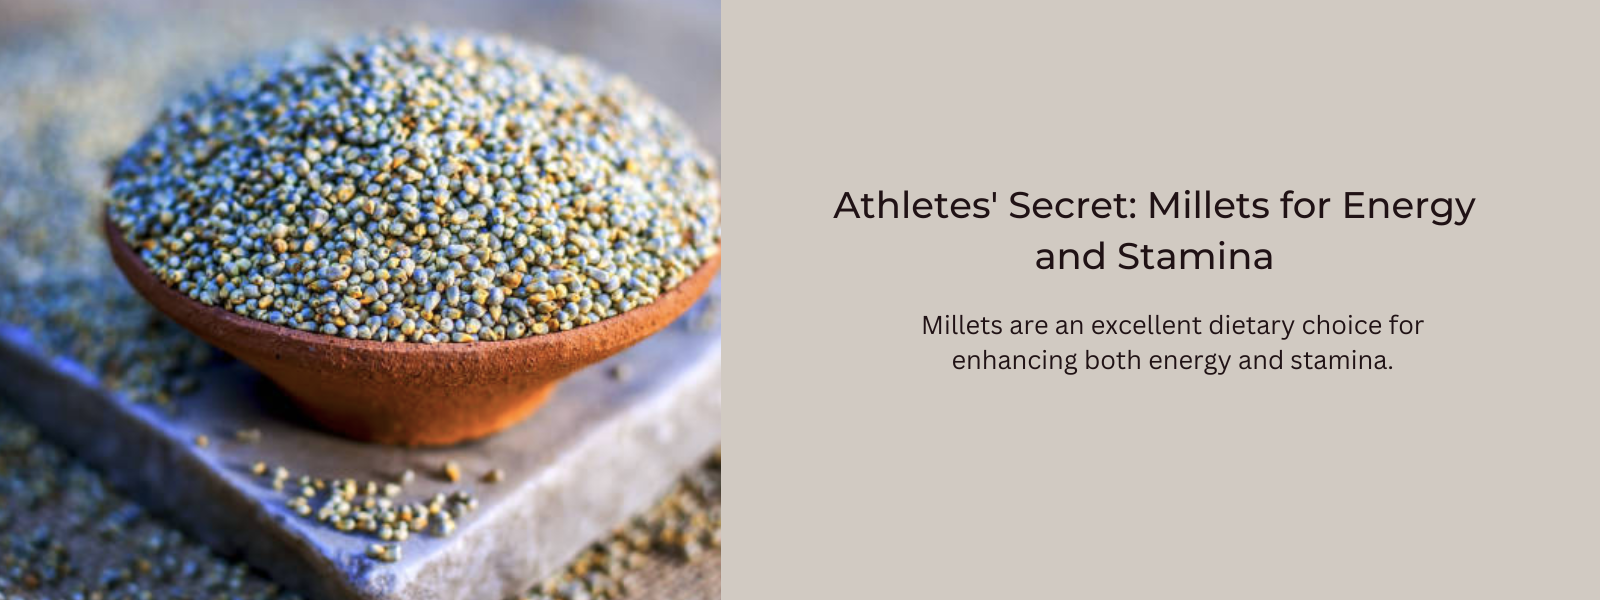 Athletes' Secret: Millets for Energy and Stamina